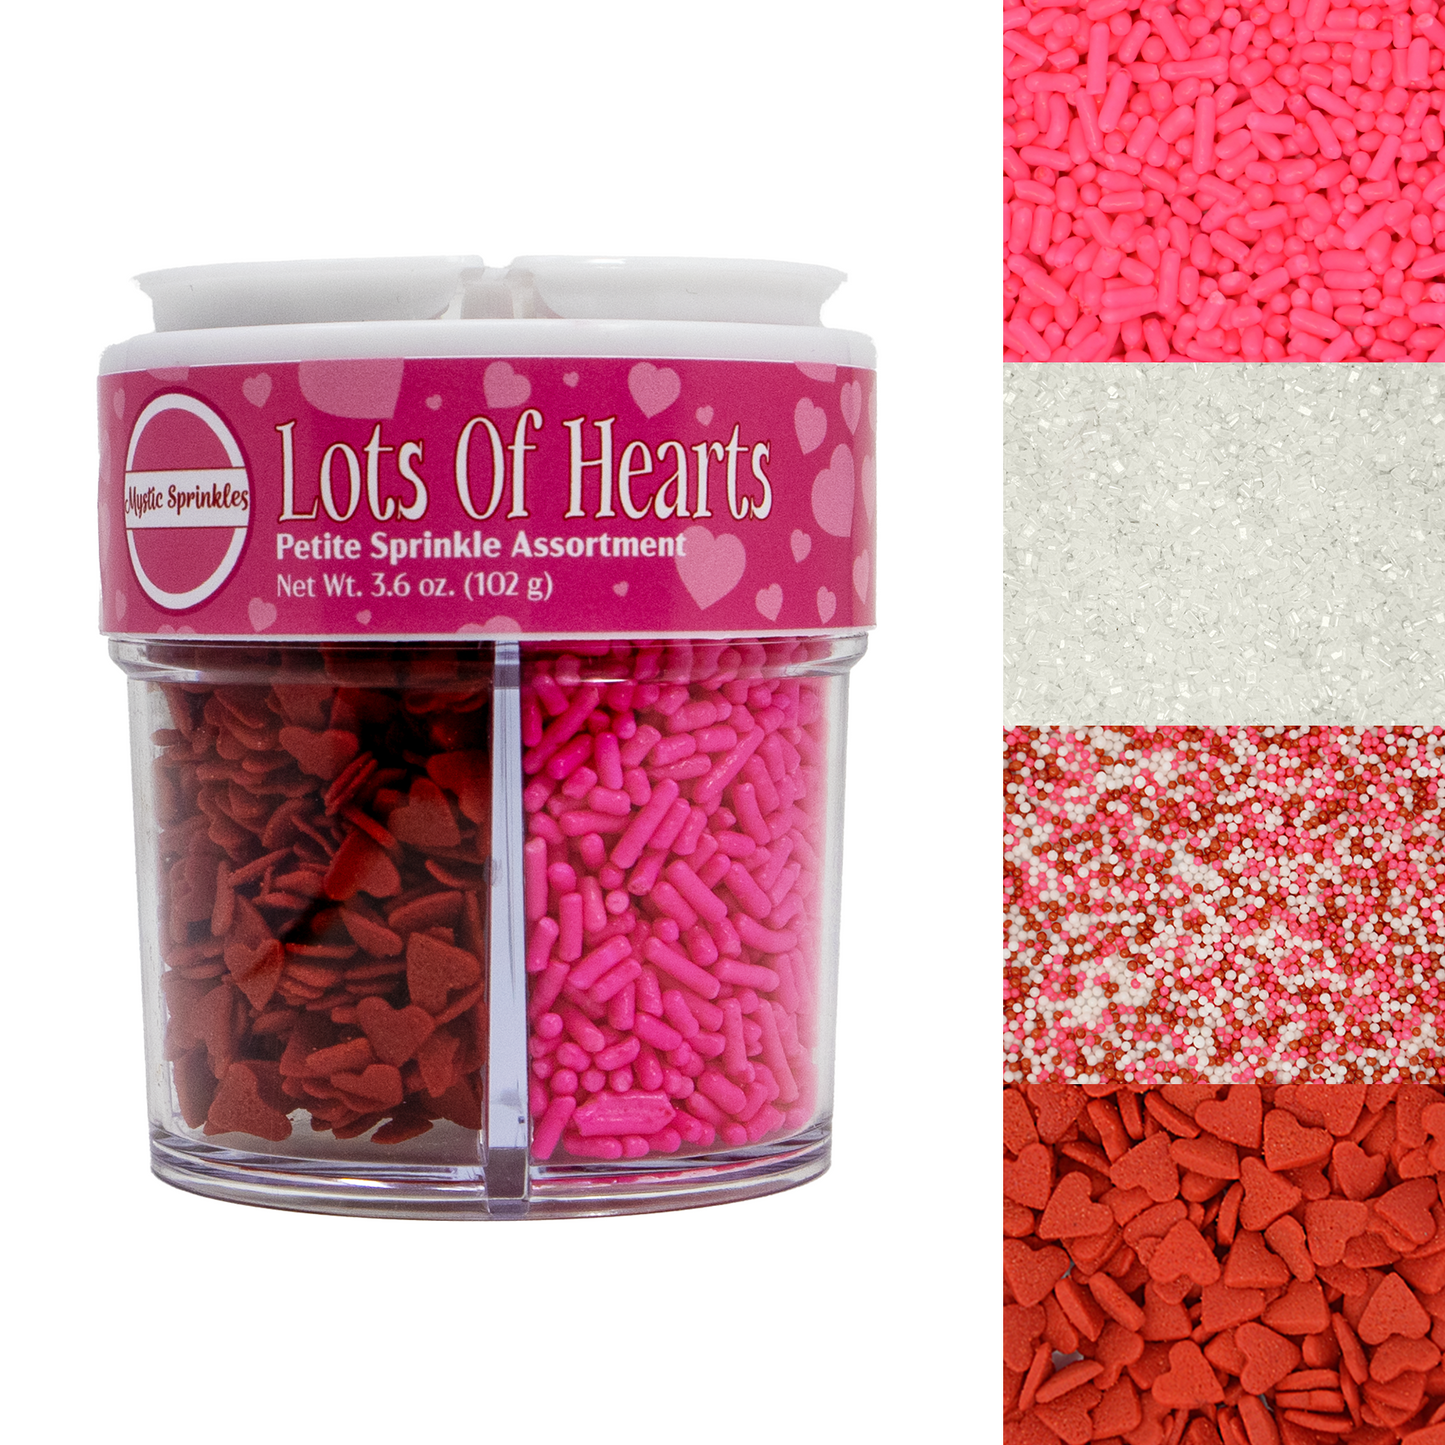 Lot's of Hearts Petite Sprinkle Assortment 3.6oz